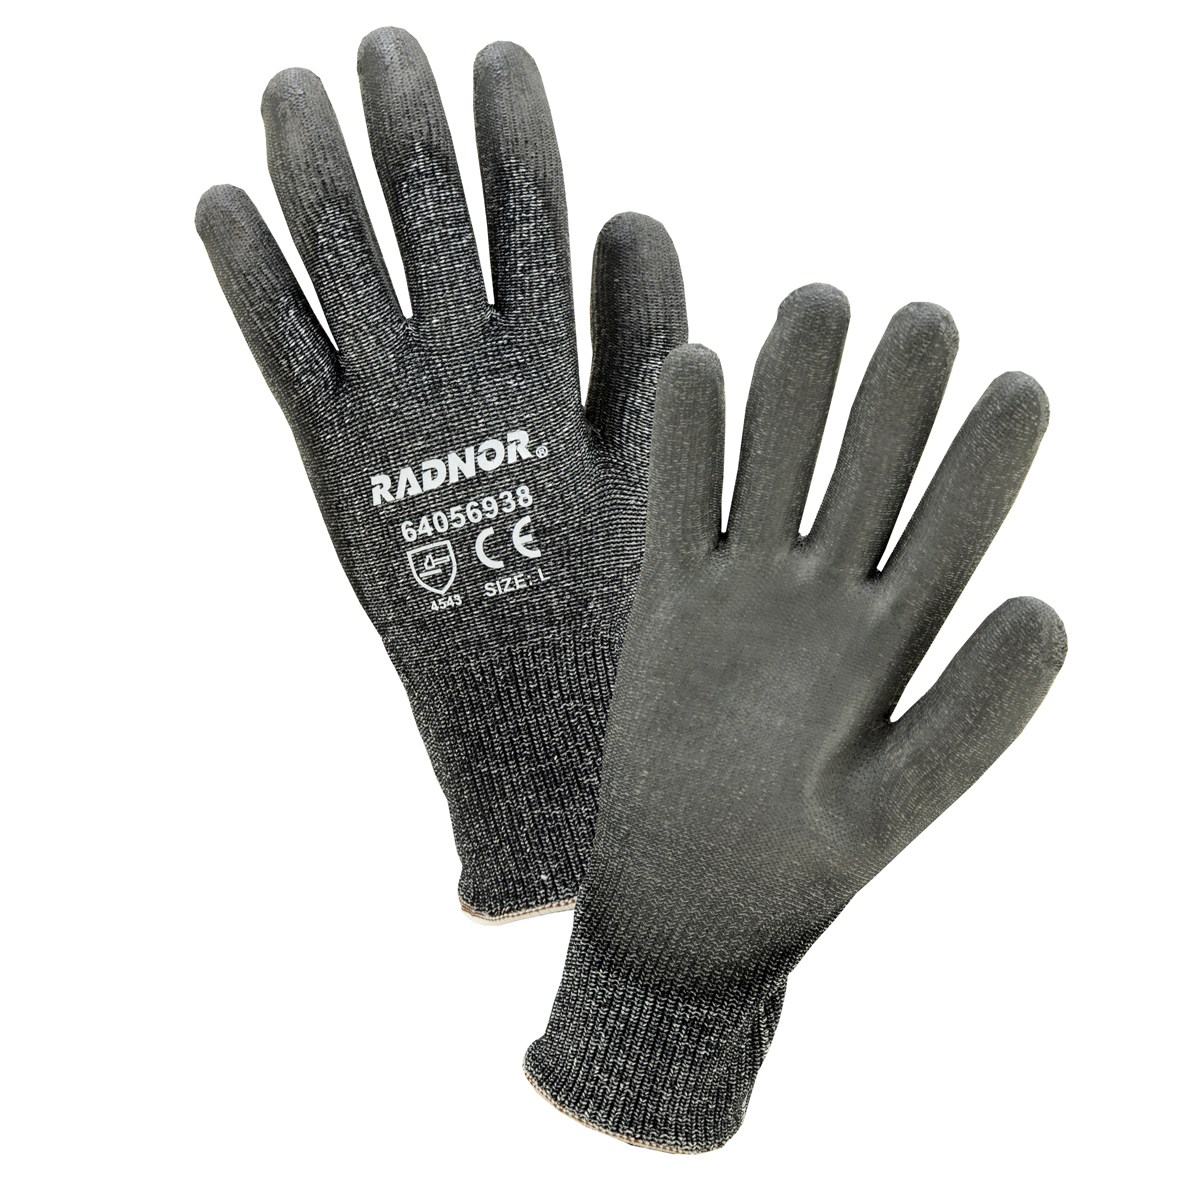 RADNOR® Large 13 Gauge Glass, High Performance Polyethylene And Nylon Cut Resistant Gloves With Polyurethane Coating